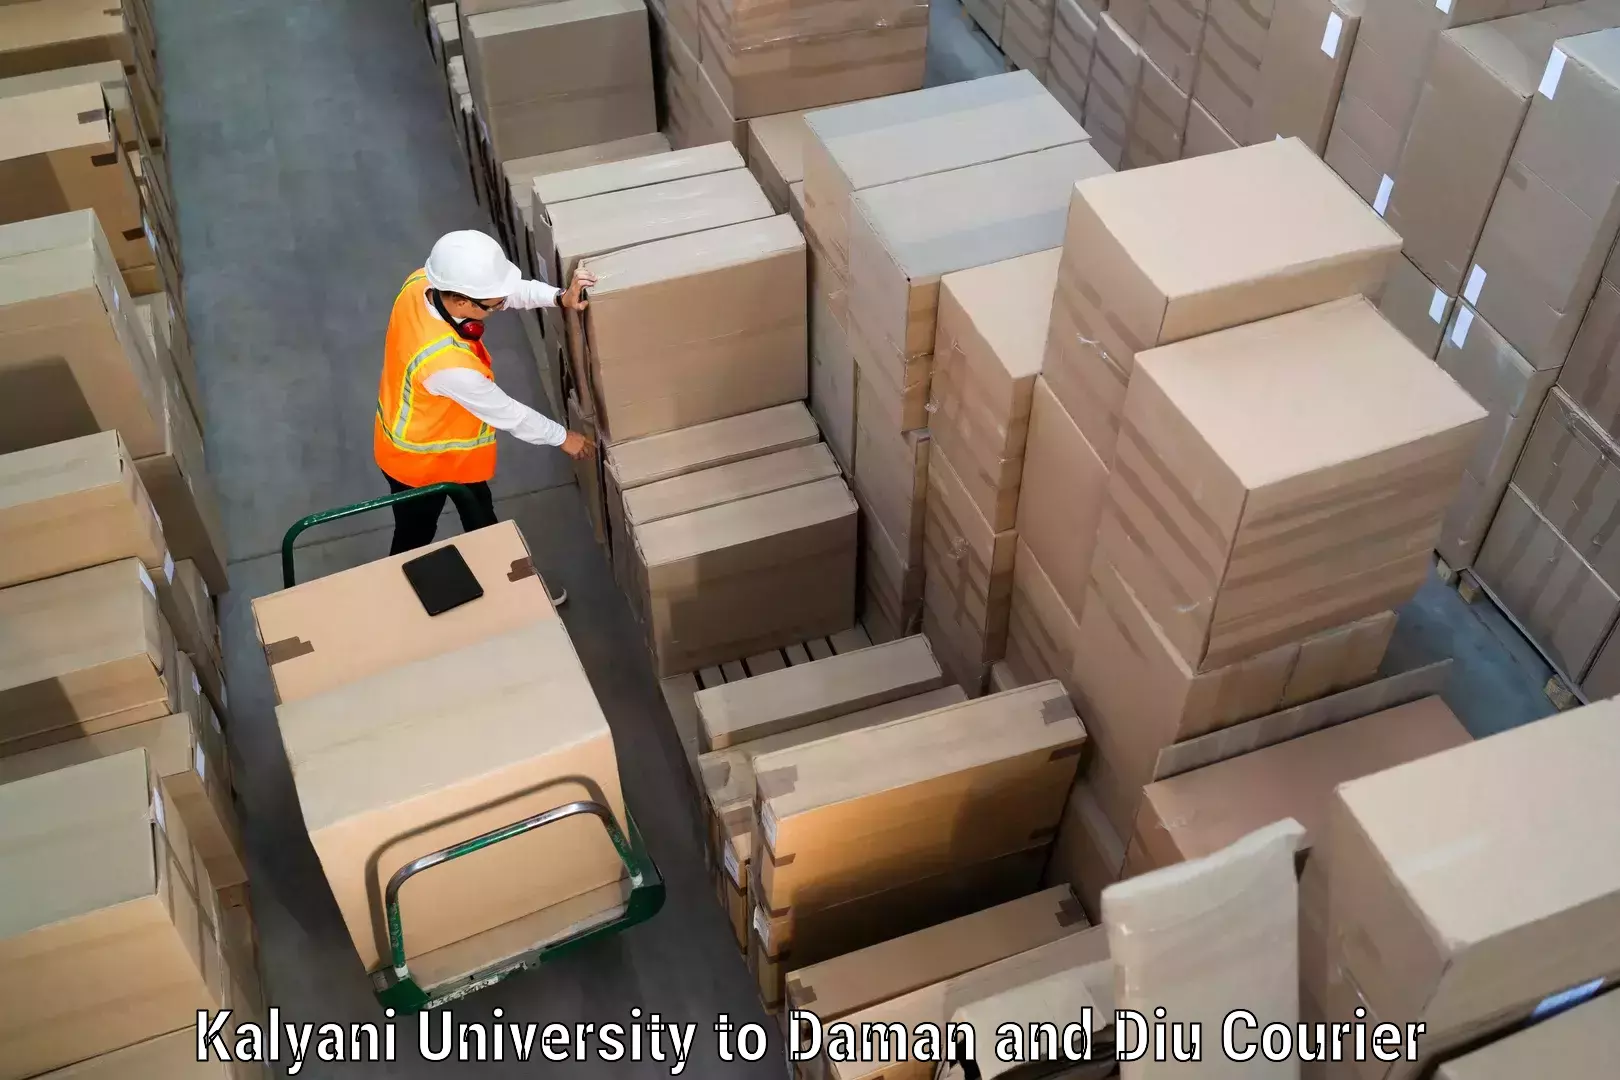 Seamless shipping service Kalyani University to Daman and Diu